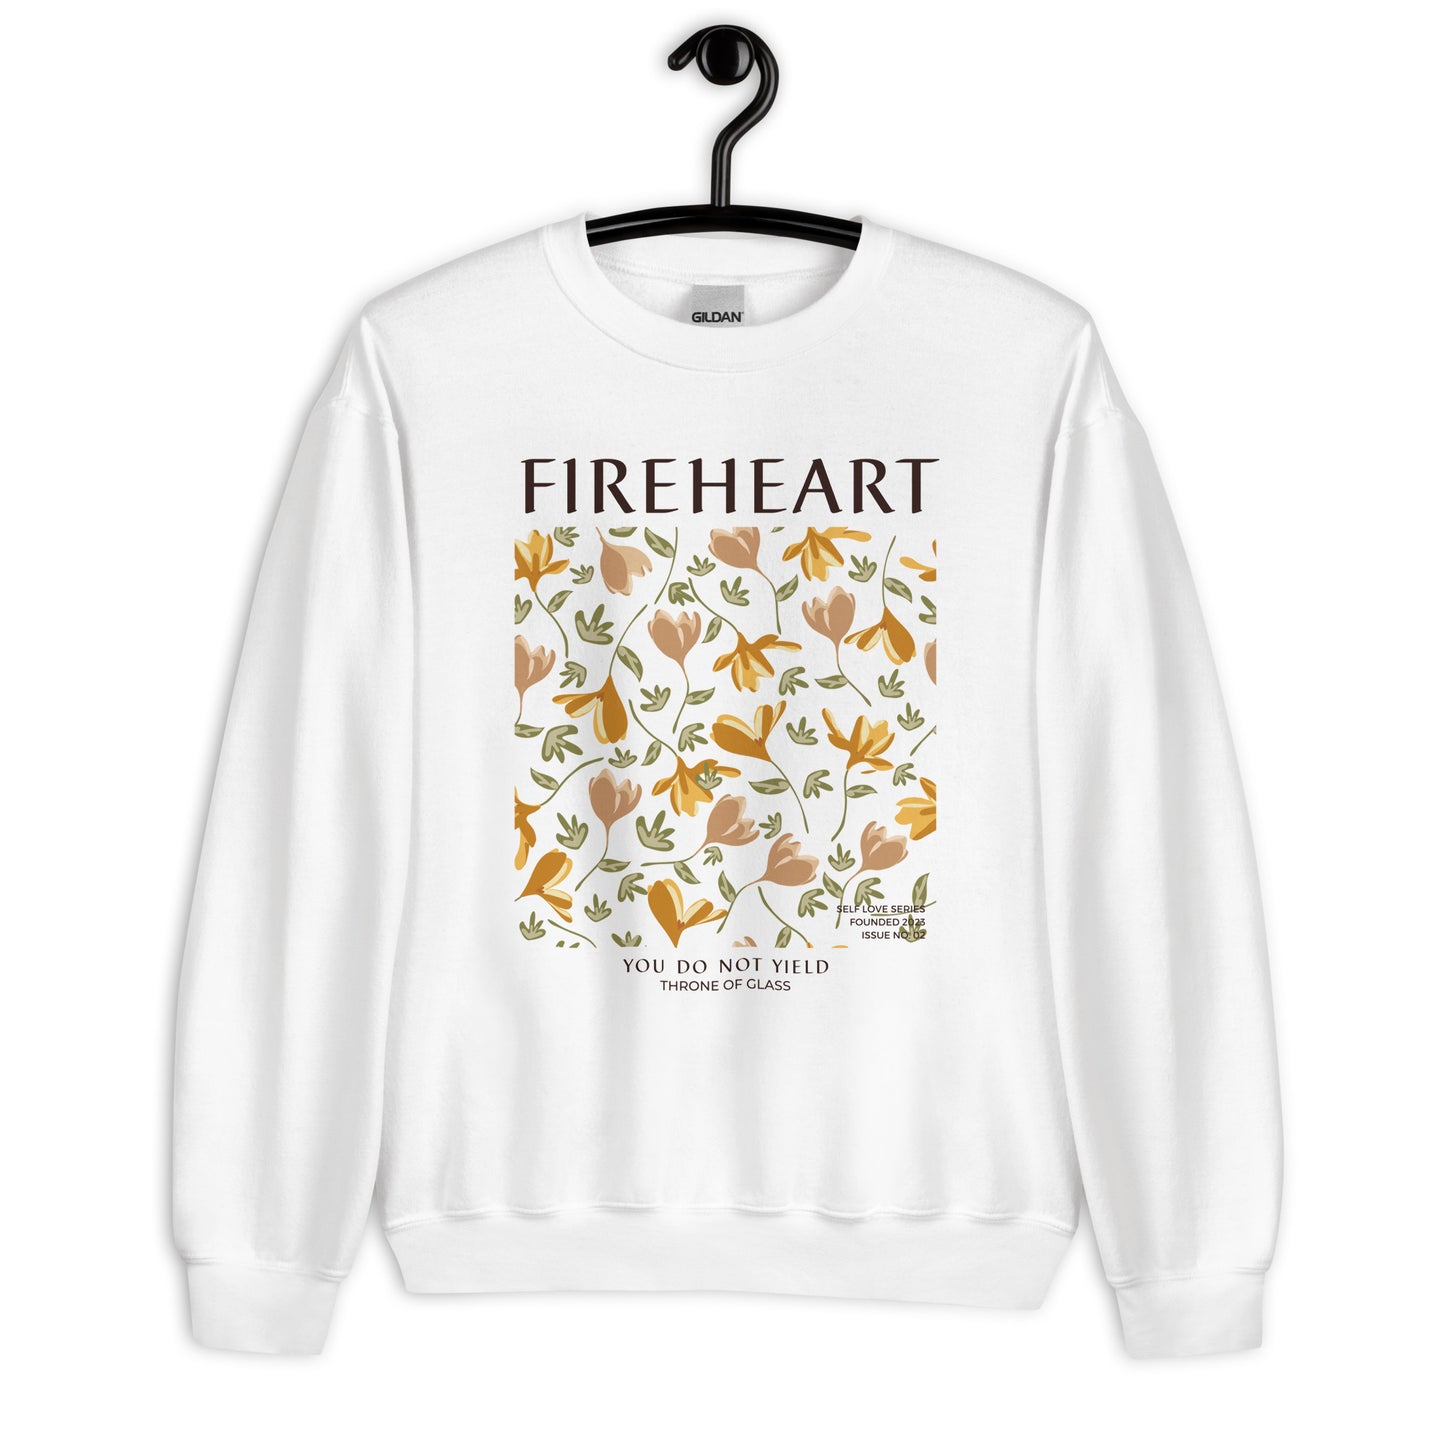 Fireheart Sweater